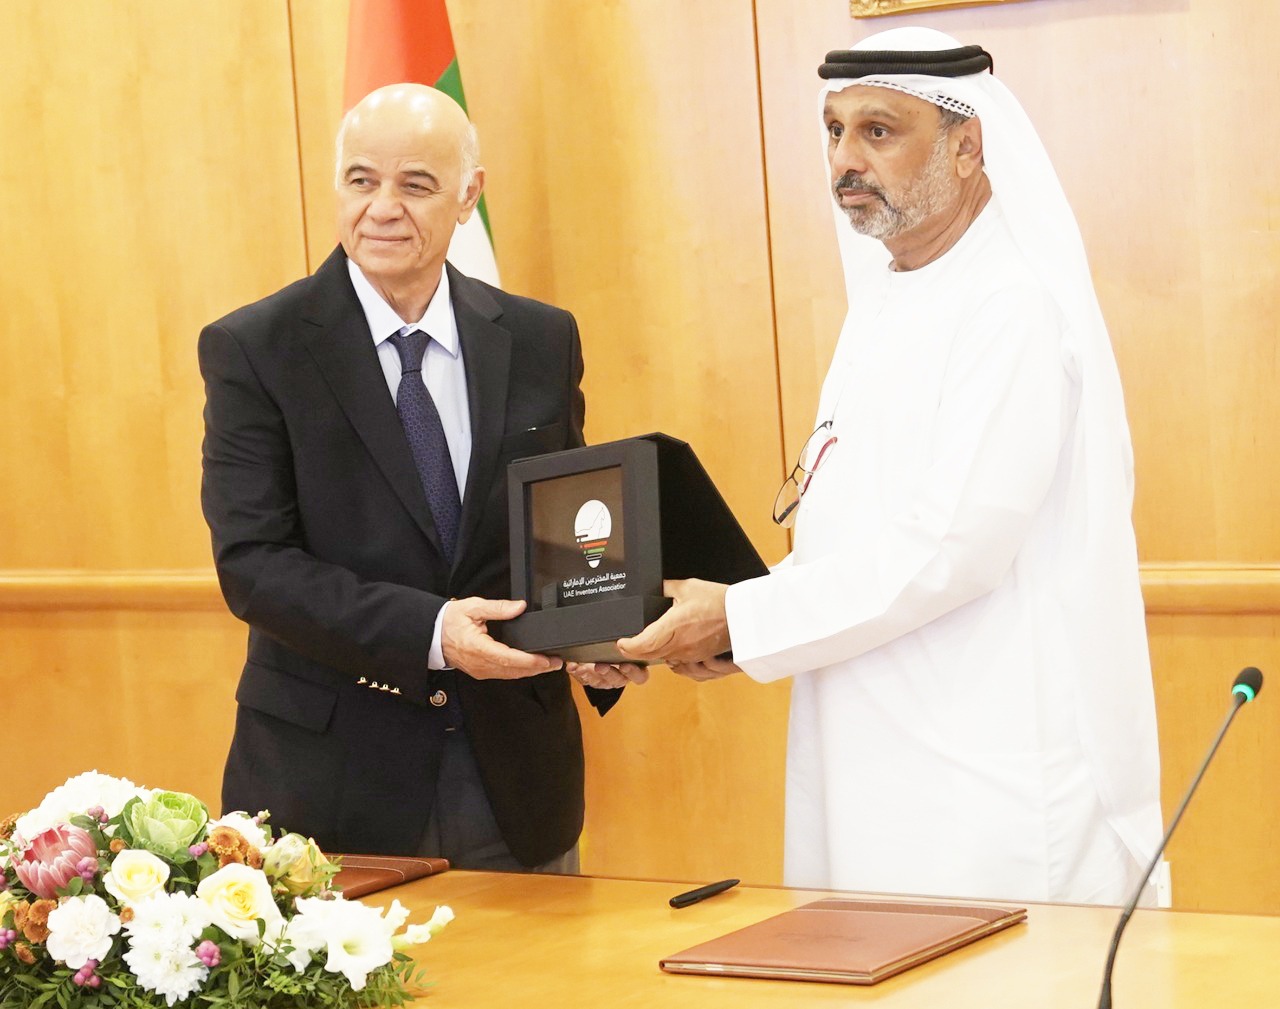 Memorandum of Cooperation and Understanding with the University of Sharjah.